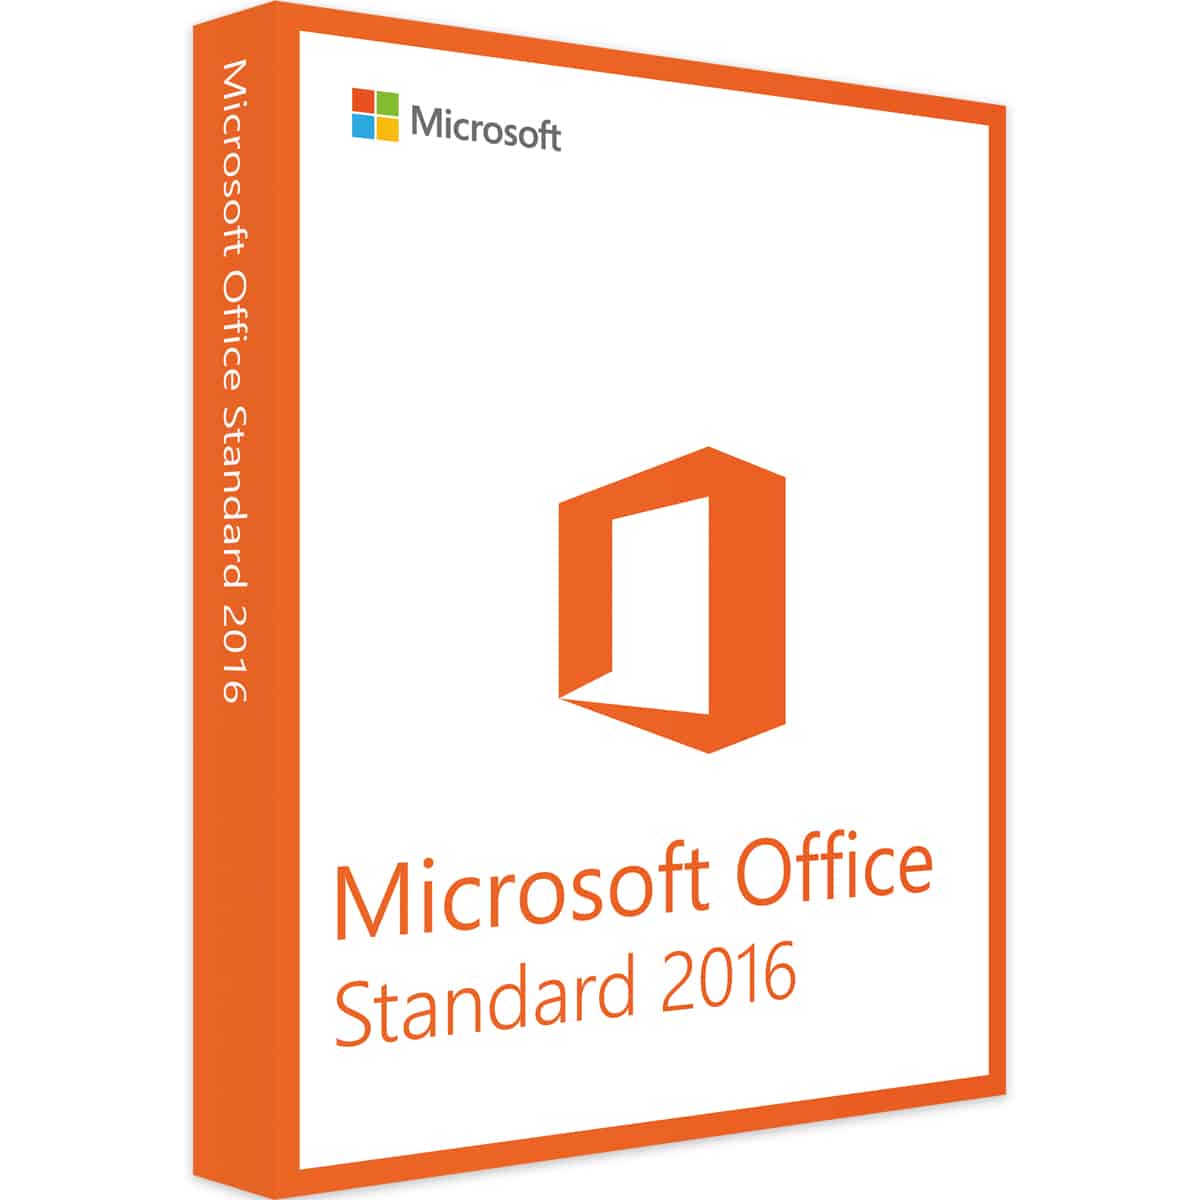 Microsoft Office 2016 Standard Product Key